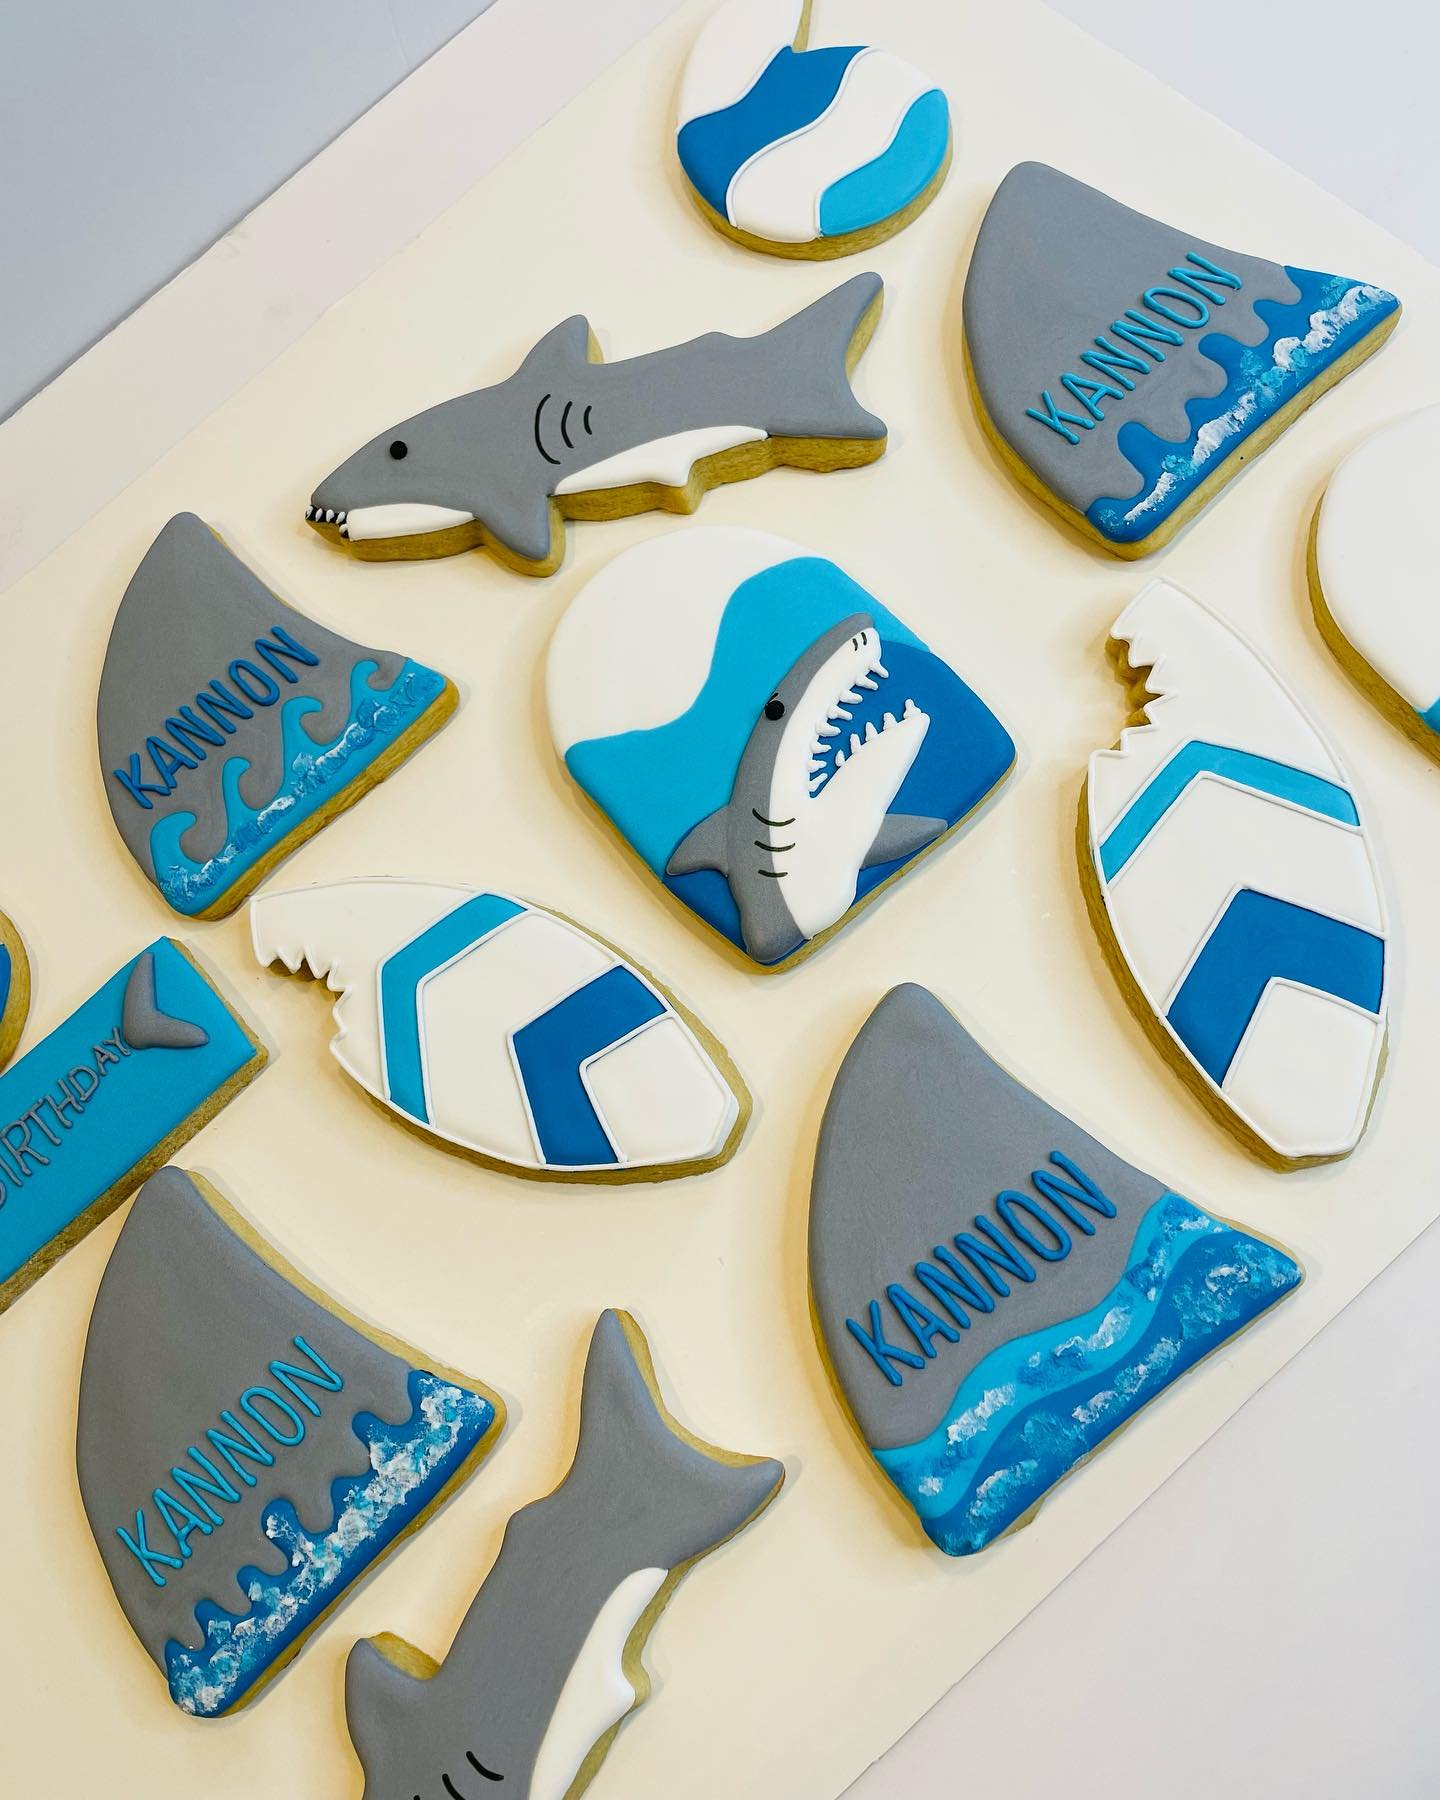 Shark cookies to match the shark cake in my previous post 🦈🌊💙

#sharkcakes #sharkcookies #mamaramsaysdesserts #mamaramsay #whenyoucalljustaskformama #beachcookies #Moderncake #customcakesatlanta #thebakefeed #bakestagram #bakinggoals #instayum #ma